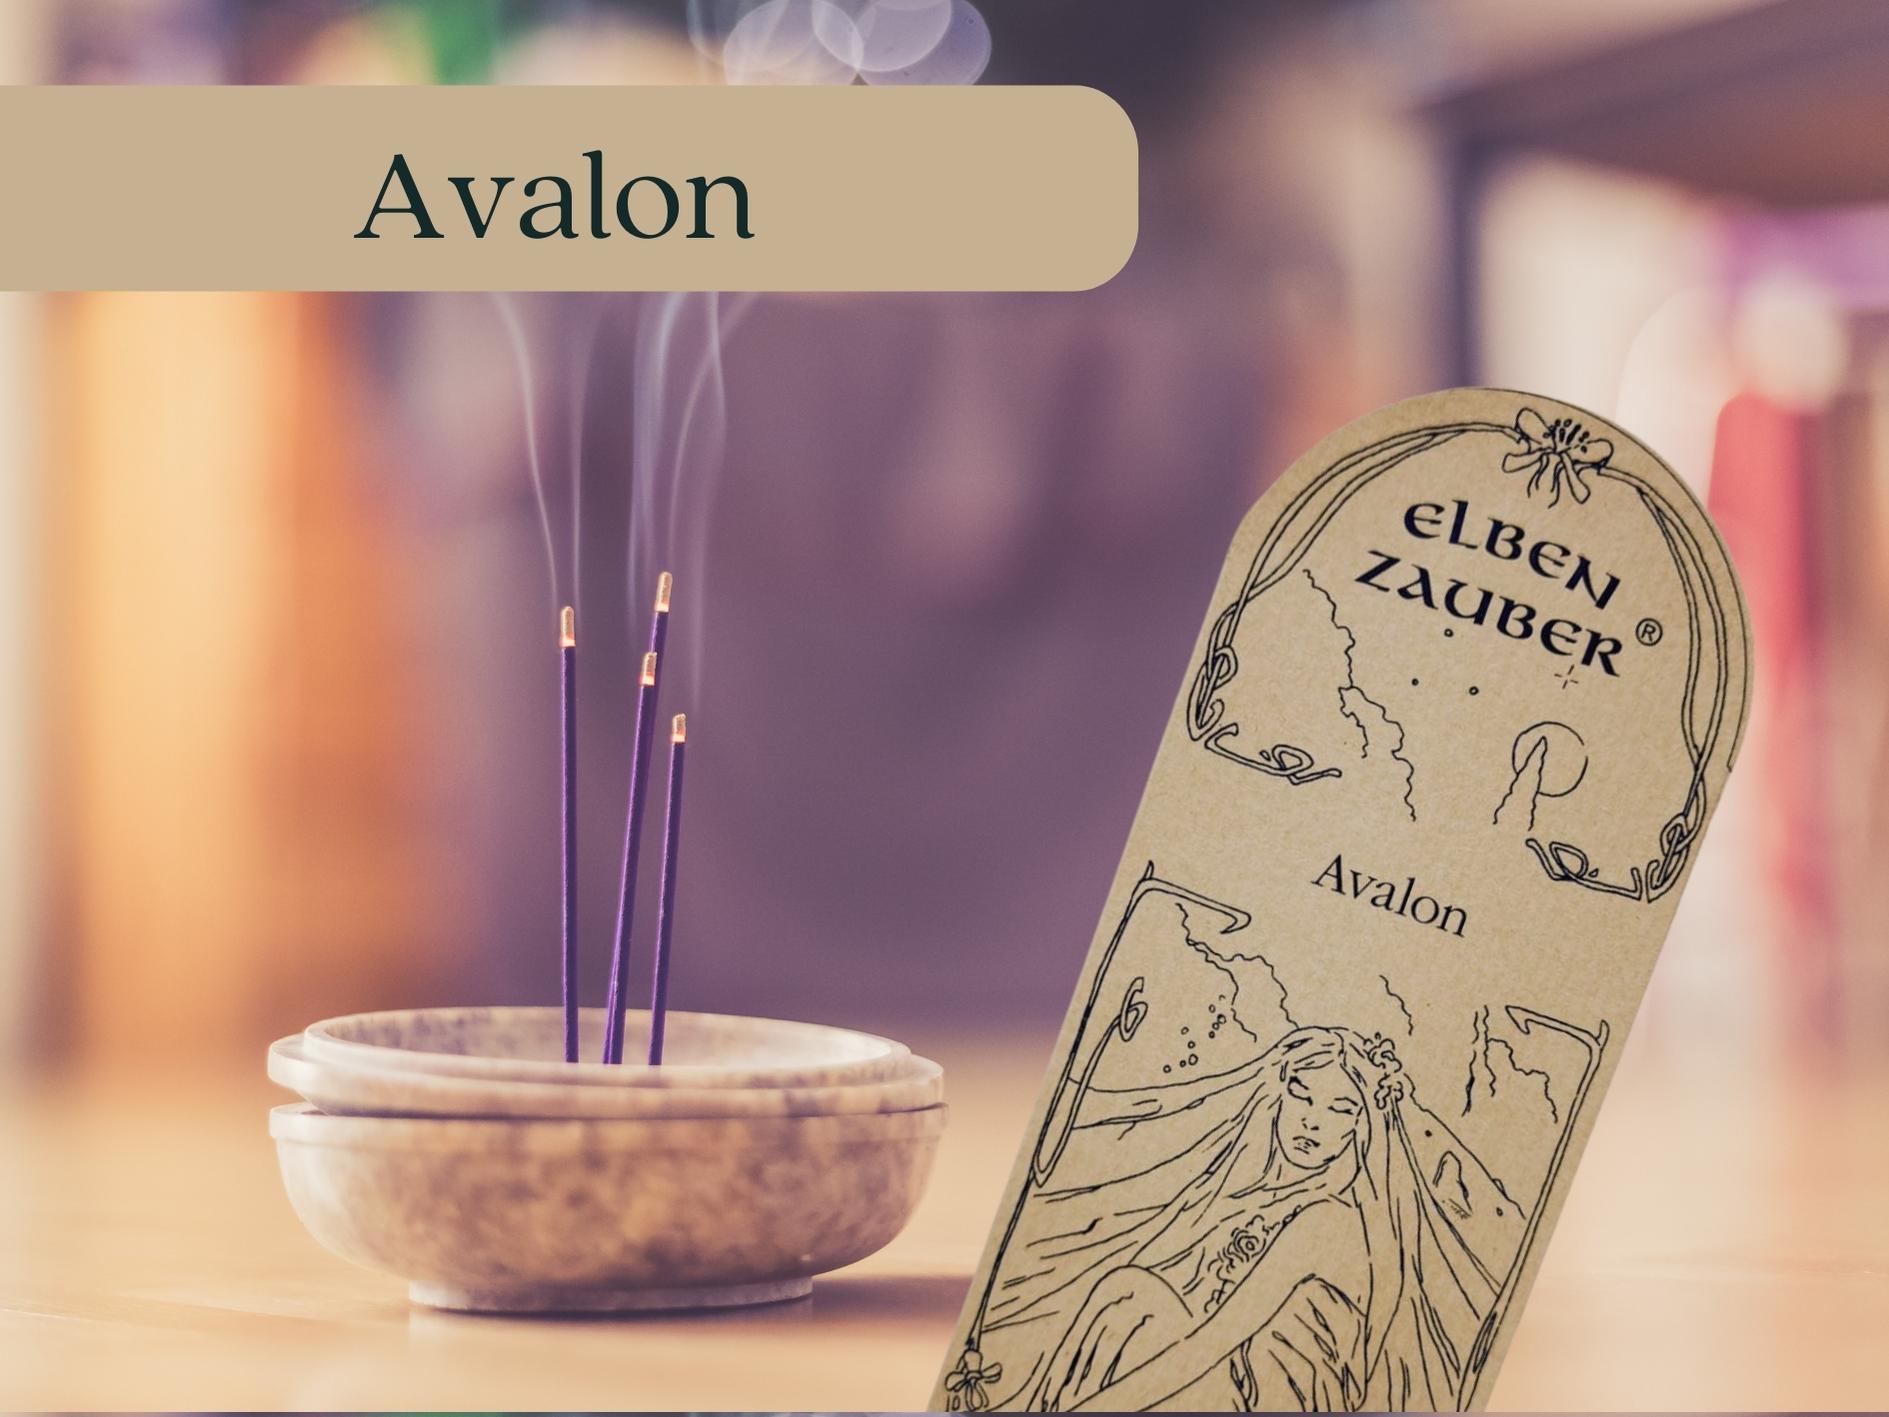 Avalon - Elbenzauber